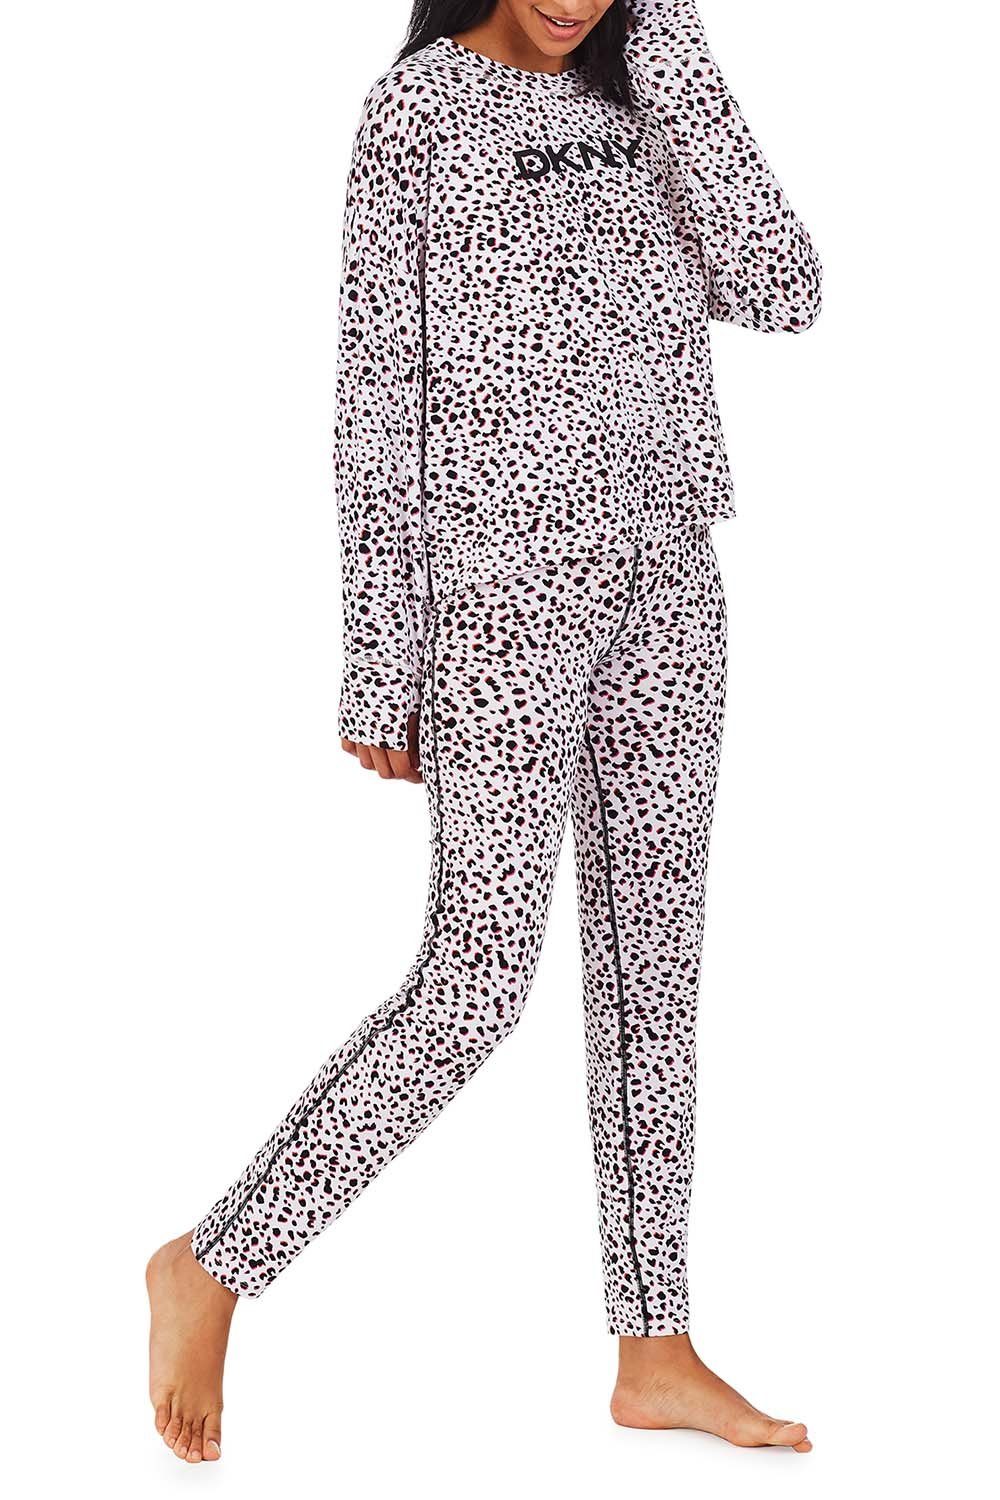 Set Pyjama DKNY Top Legging & YI2922523